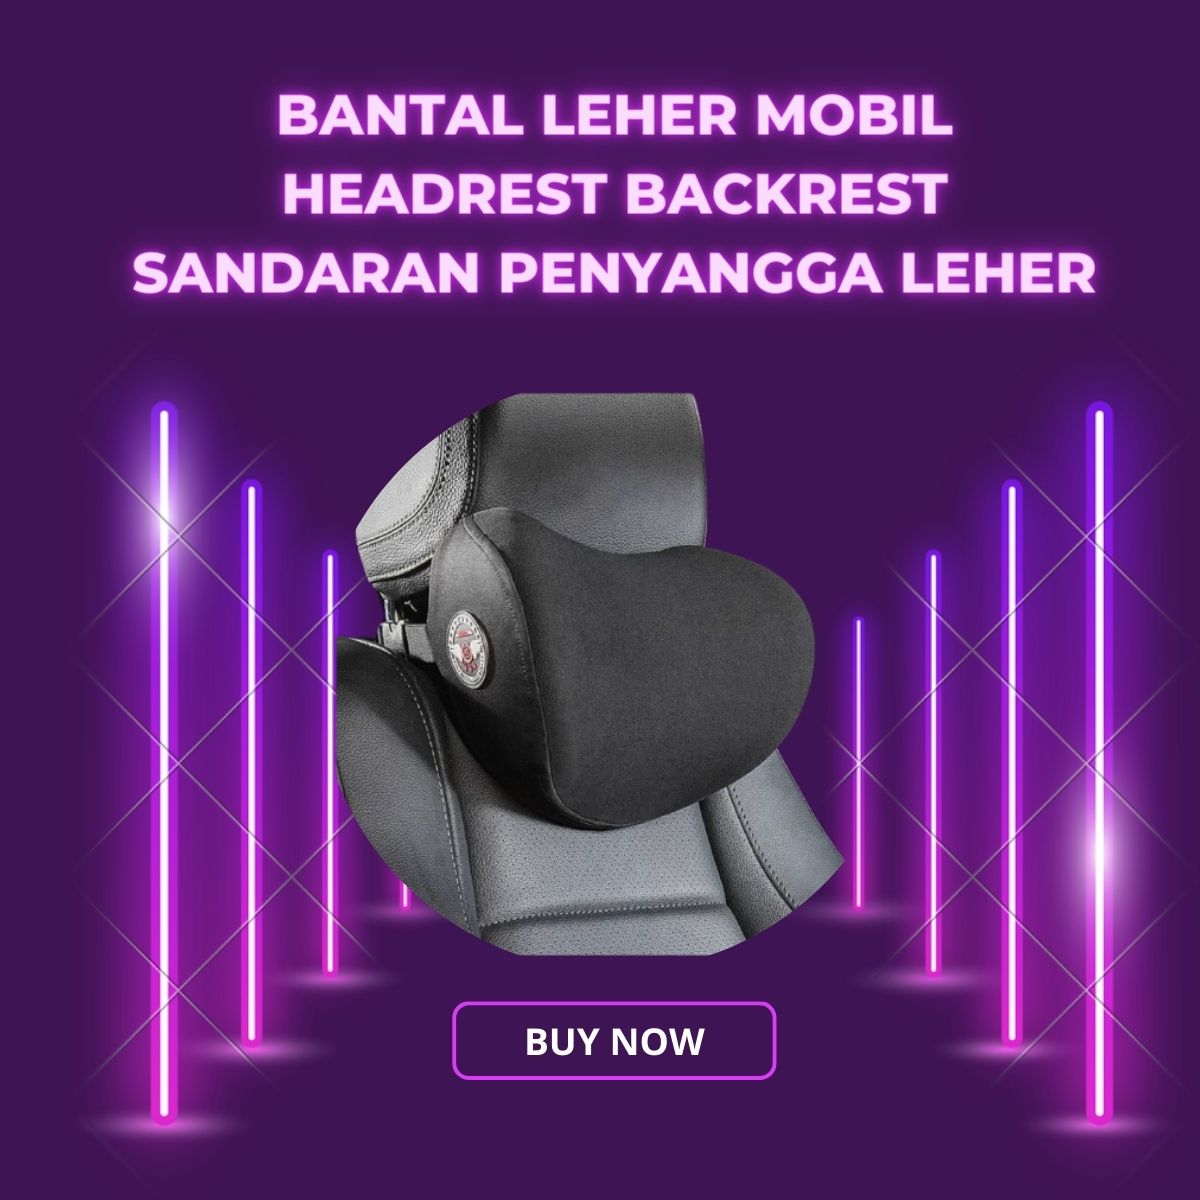 AM-65 Bantal Leher Mobil Headrest Backrest Sandaran Penyangga Leher Punggung Kursi Jok Mobil Car Neck Pillow Memory Foam High Quality